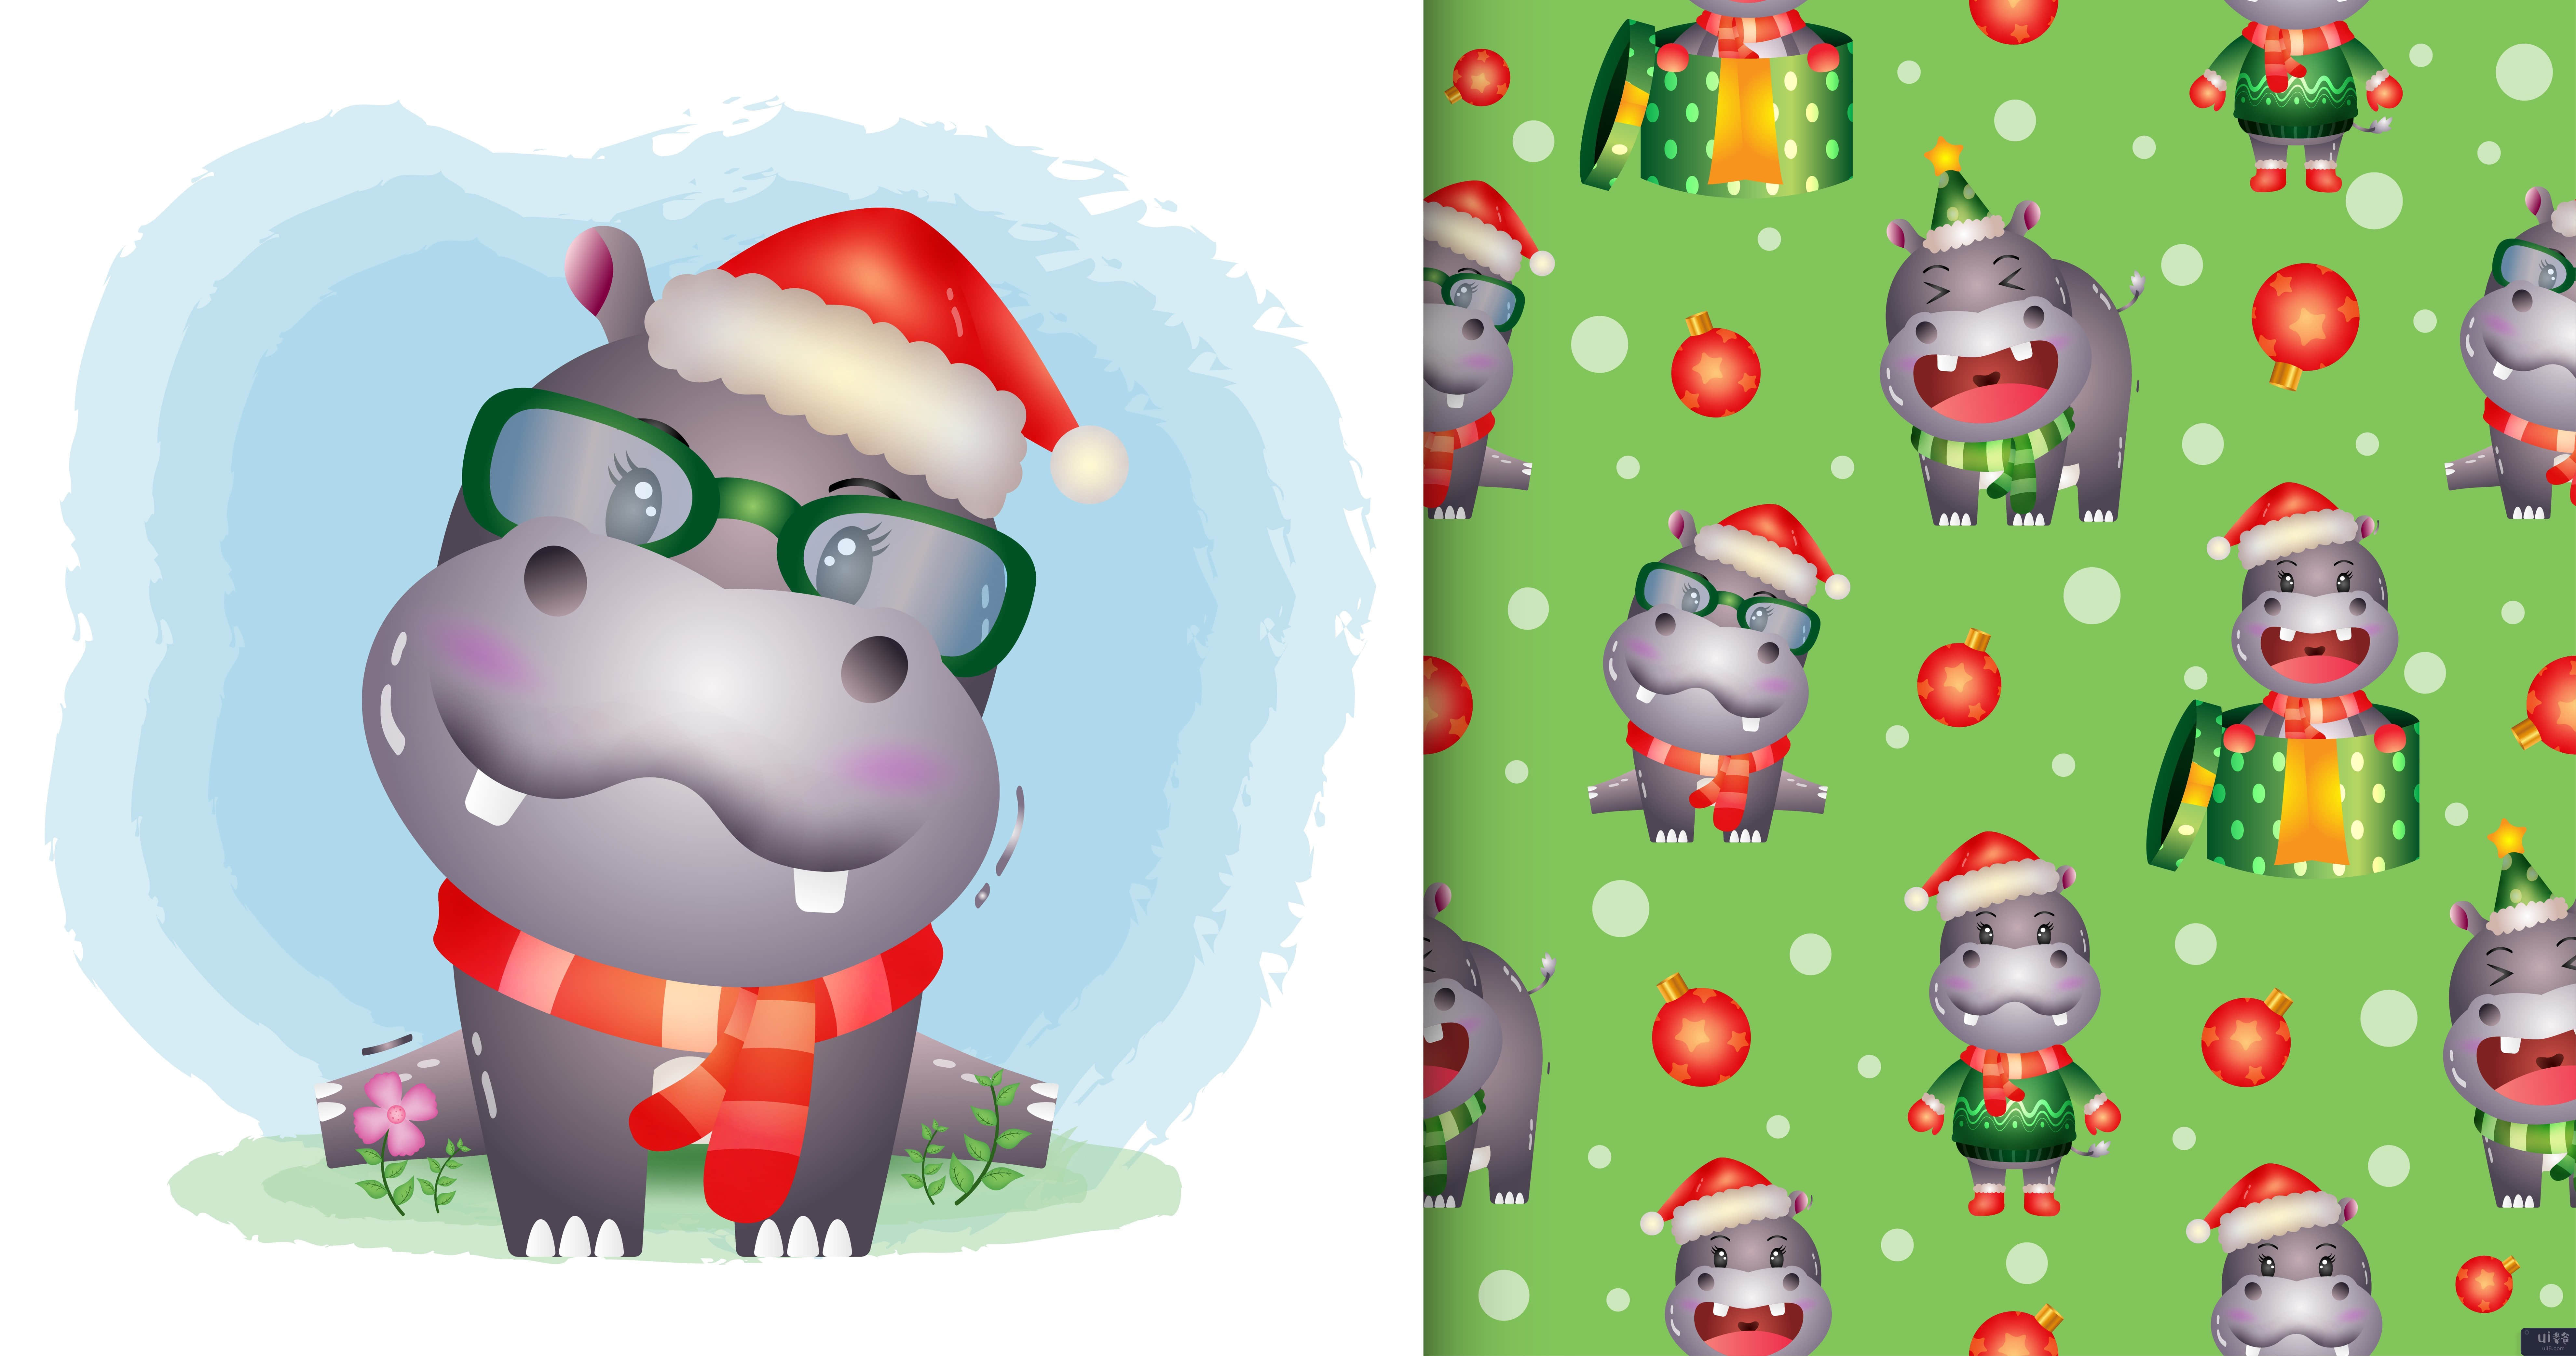 一个可爱的河马圣诞人物。无缝图案和插图设计(a cute hippo christmas characters. seamless pattern and illustration designs)插图2